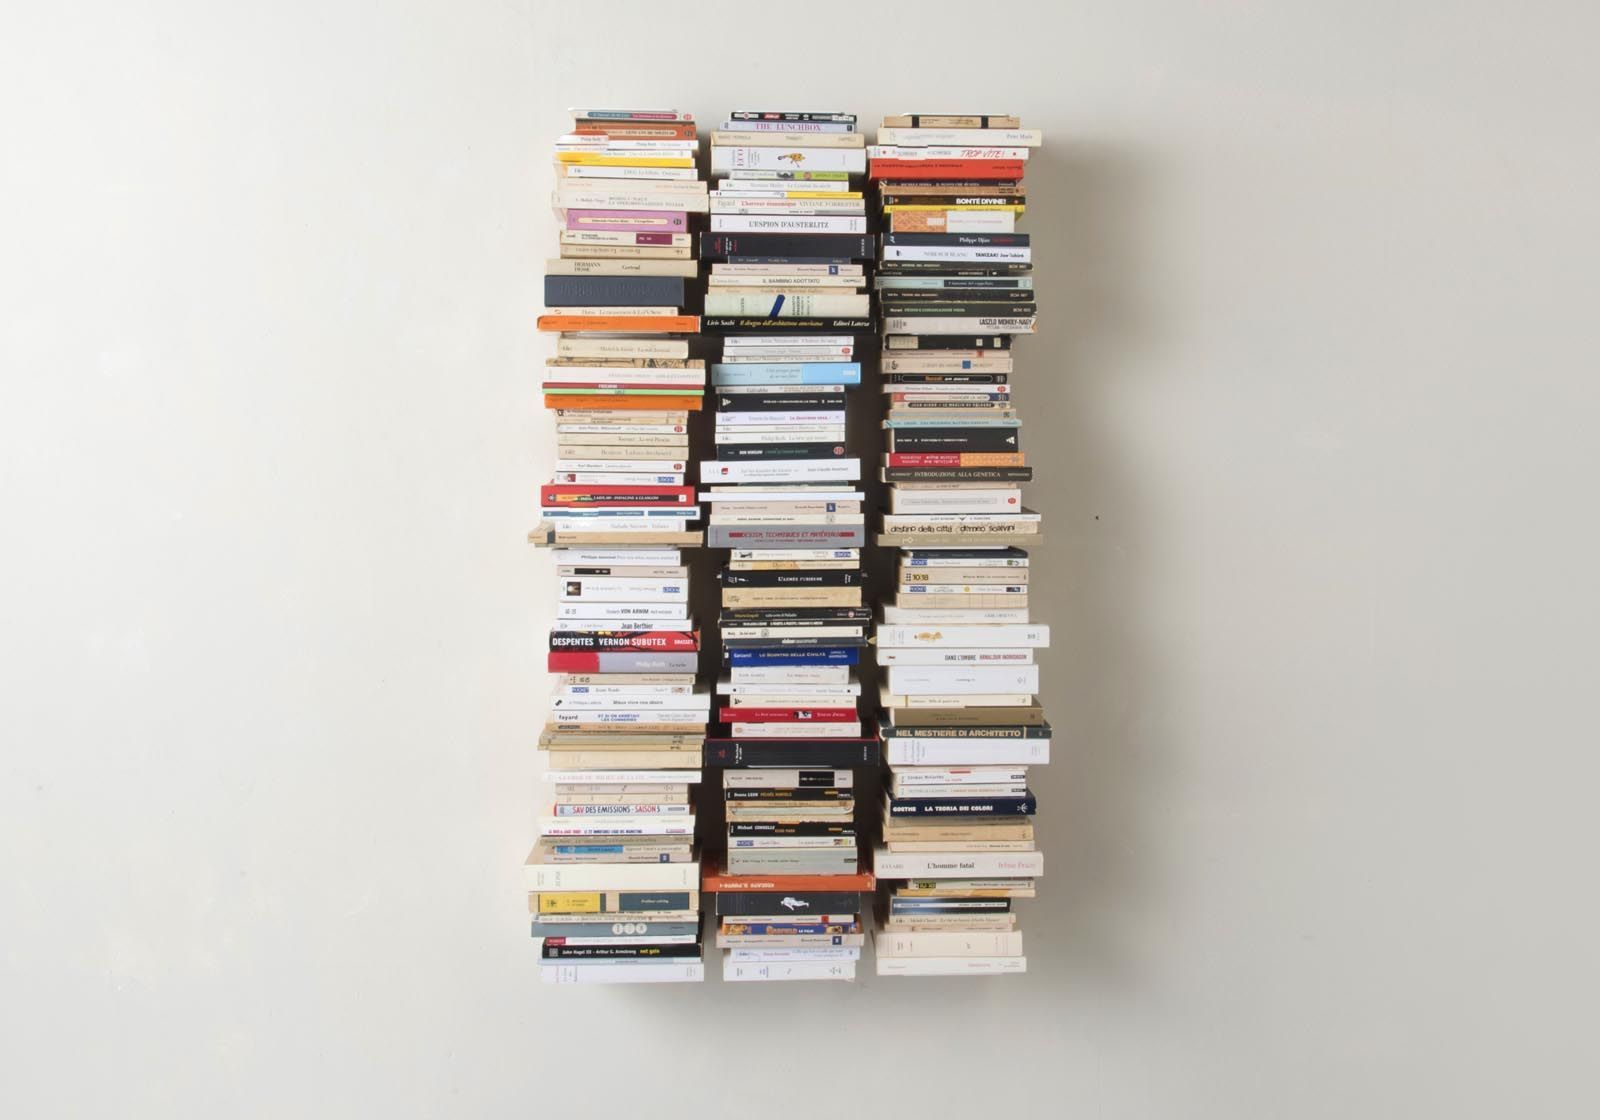 Bookshelf - Vertical bookcase - Set of 6